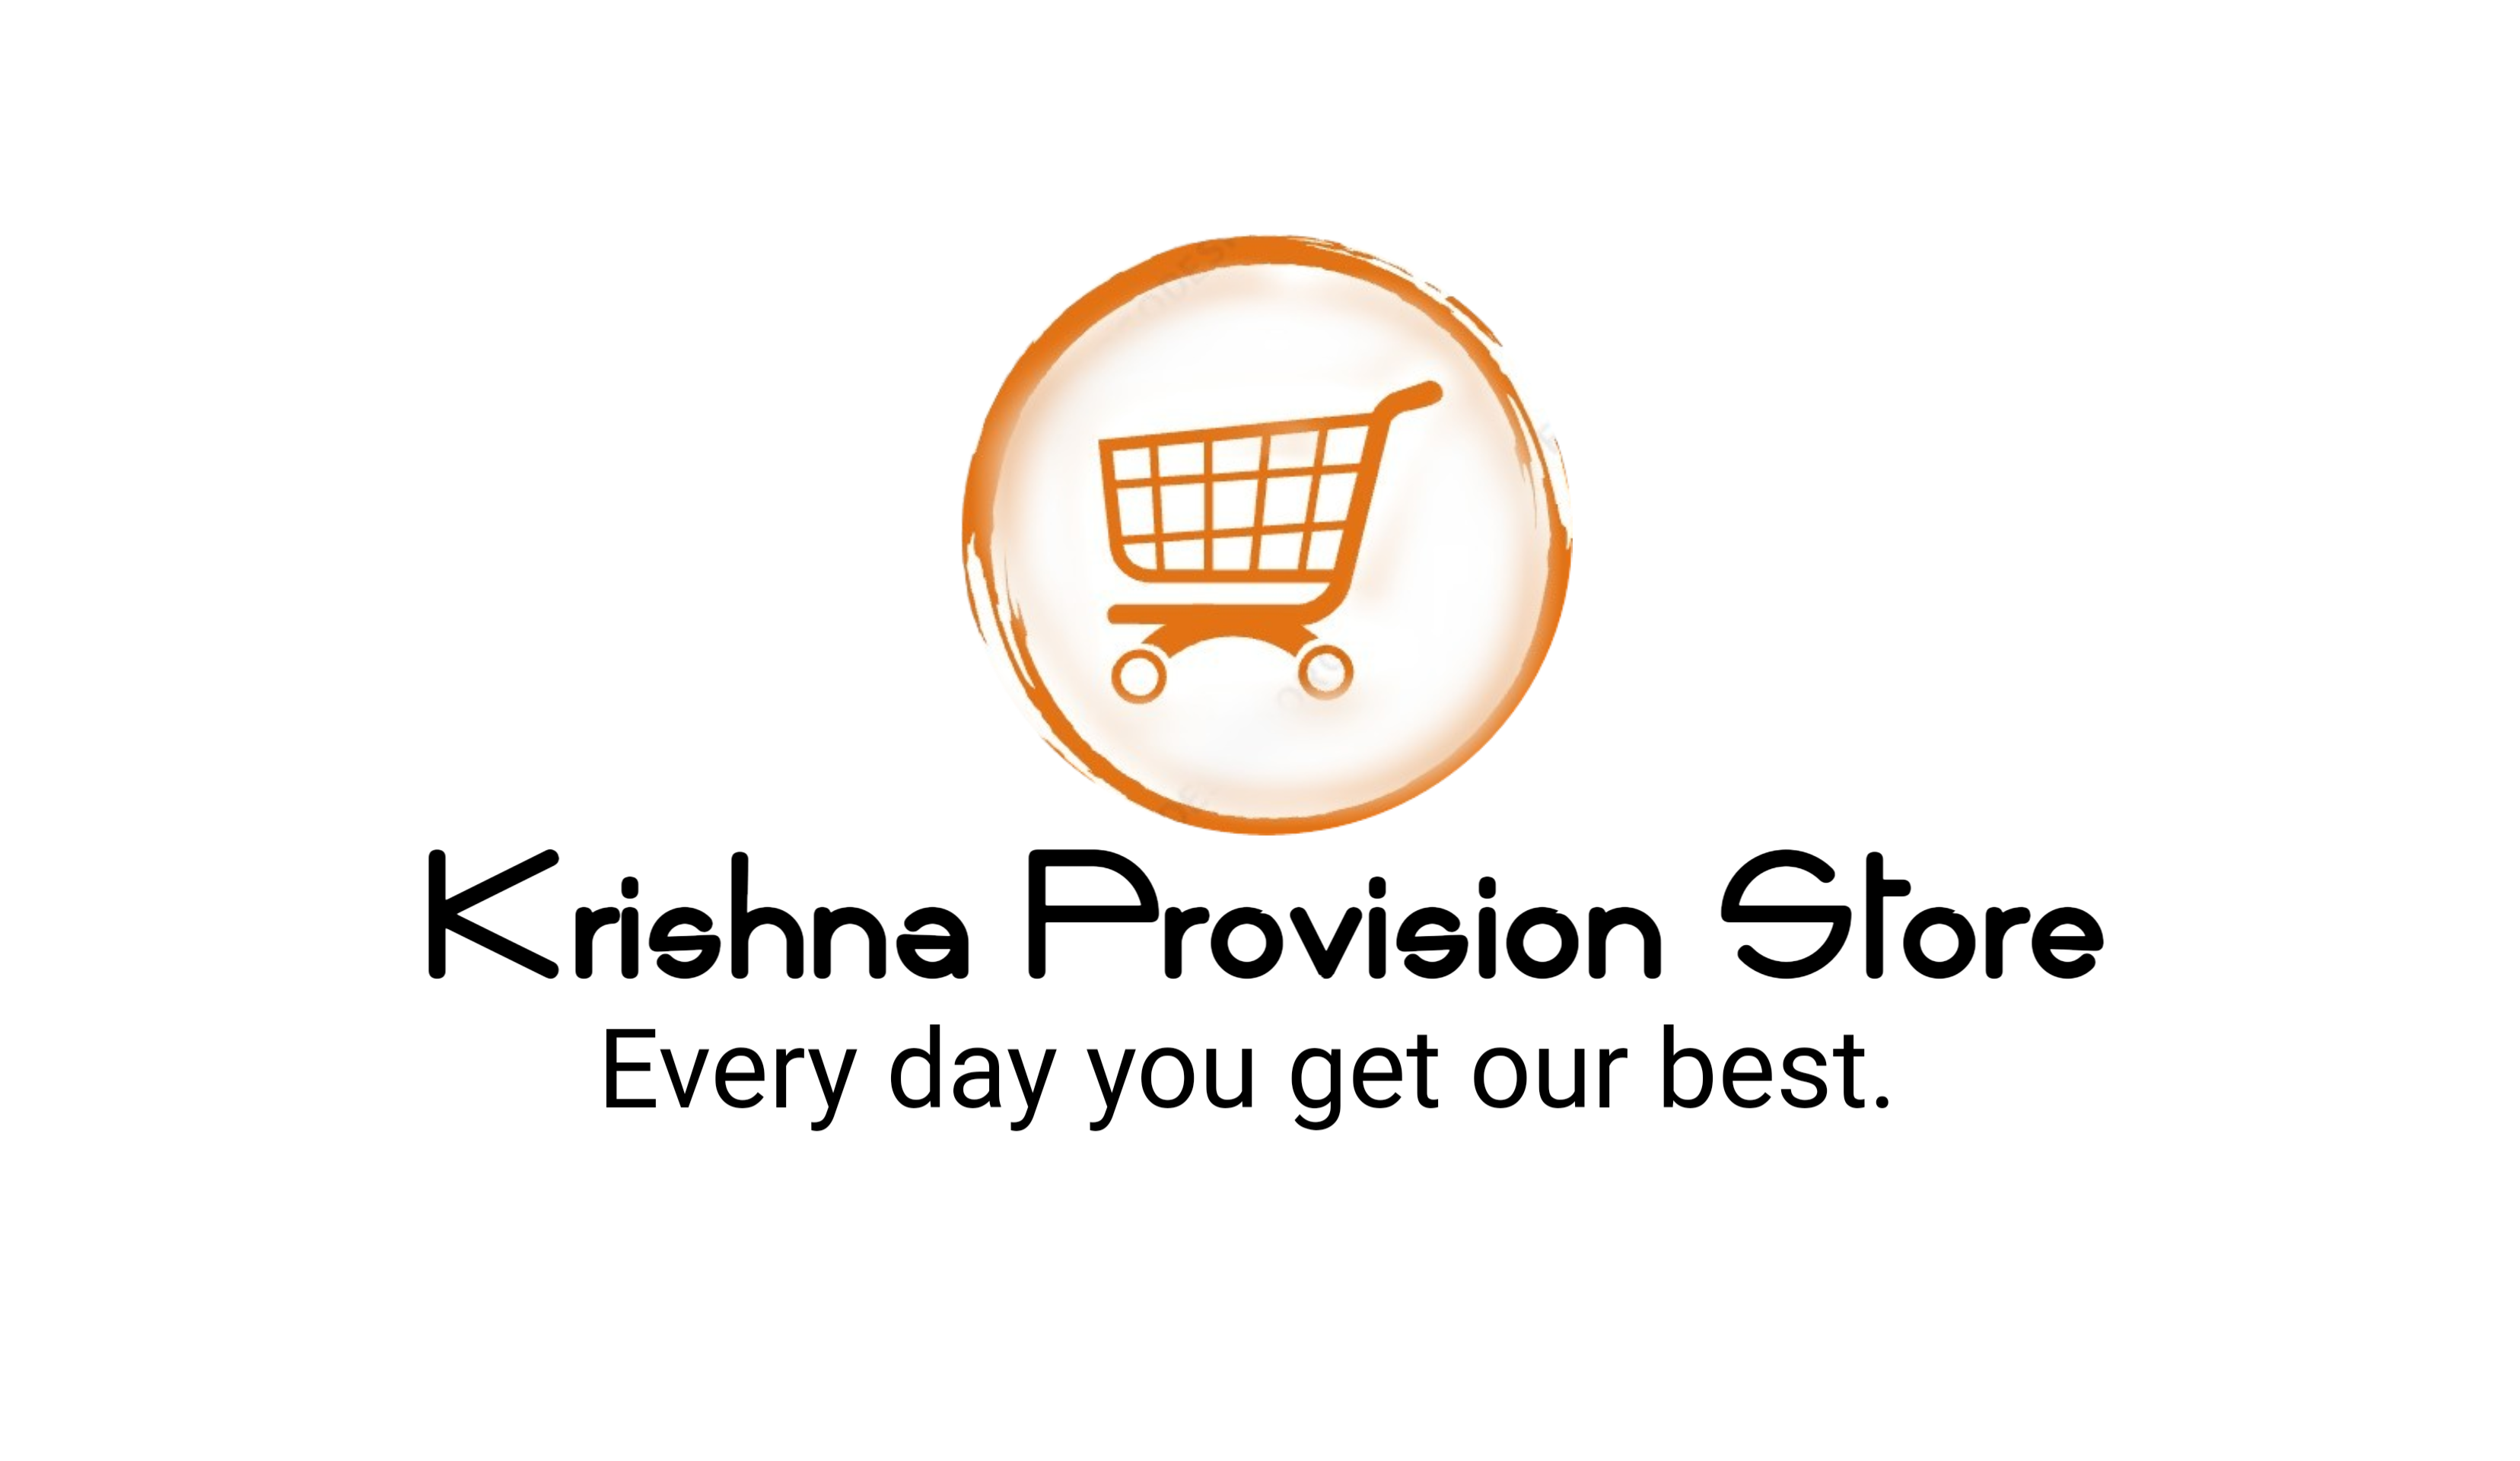 Krishna Provition Store